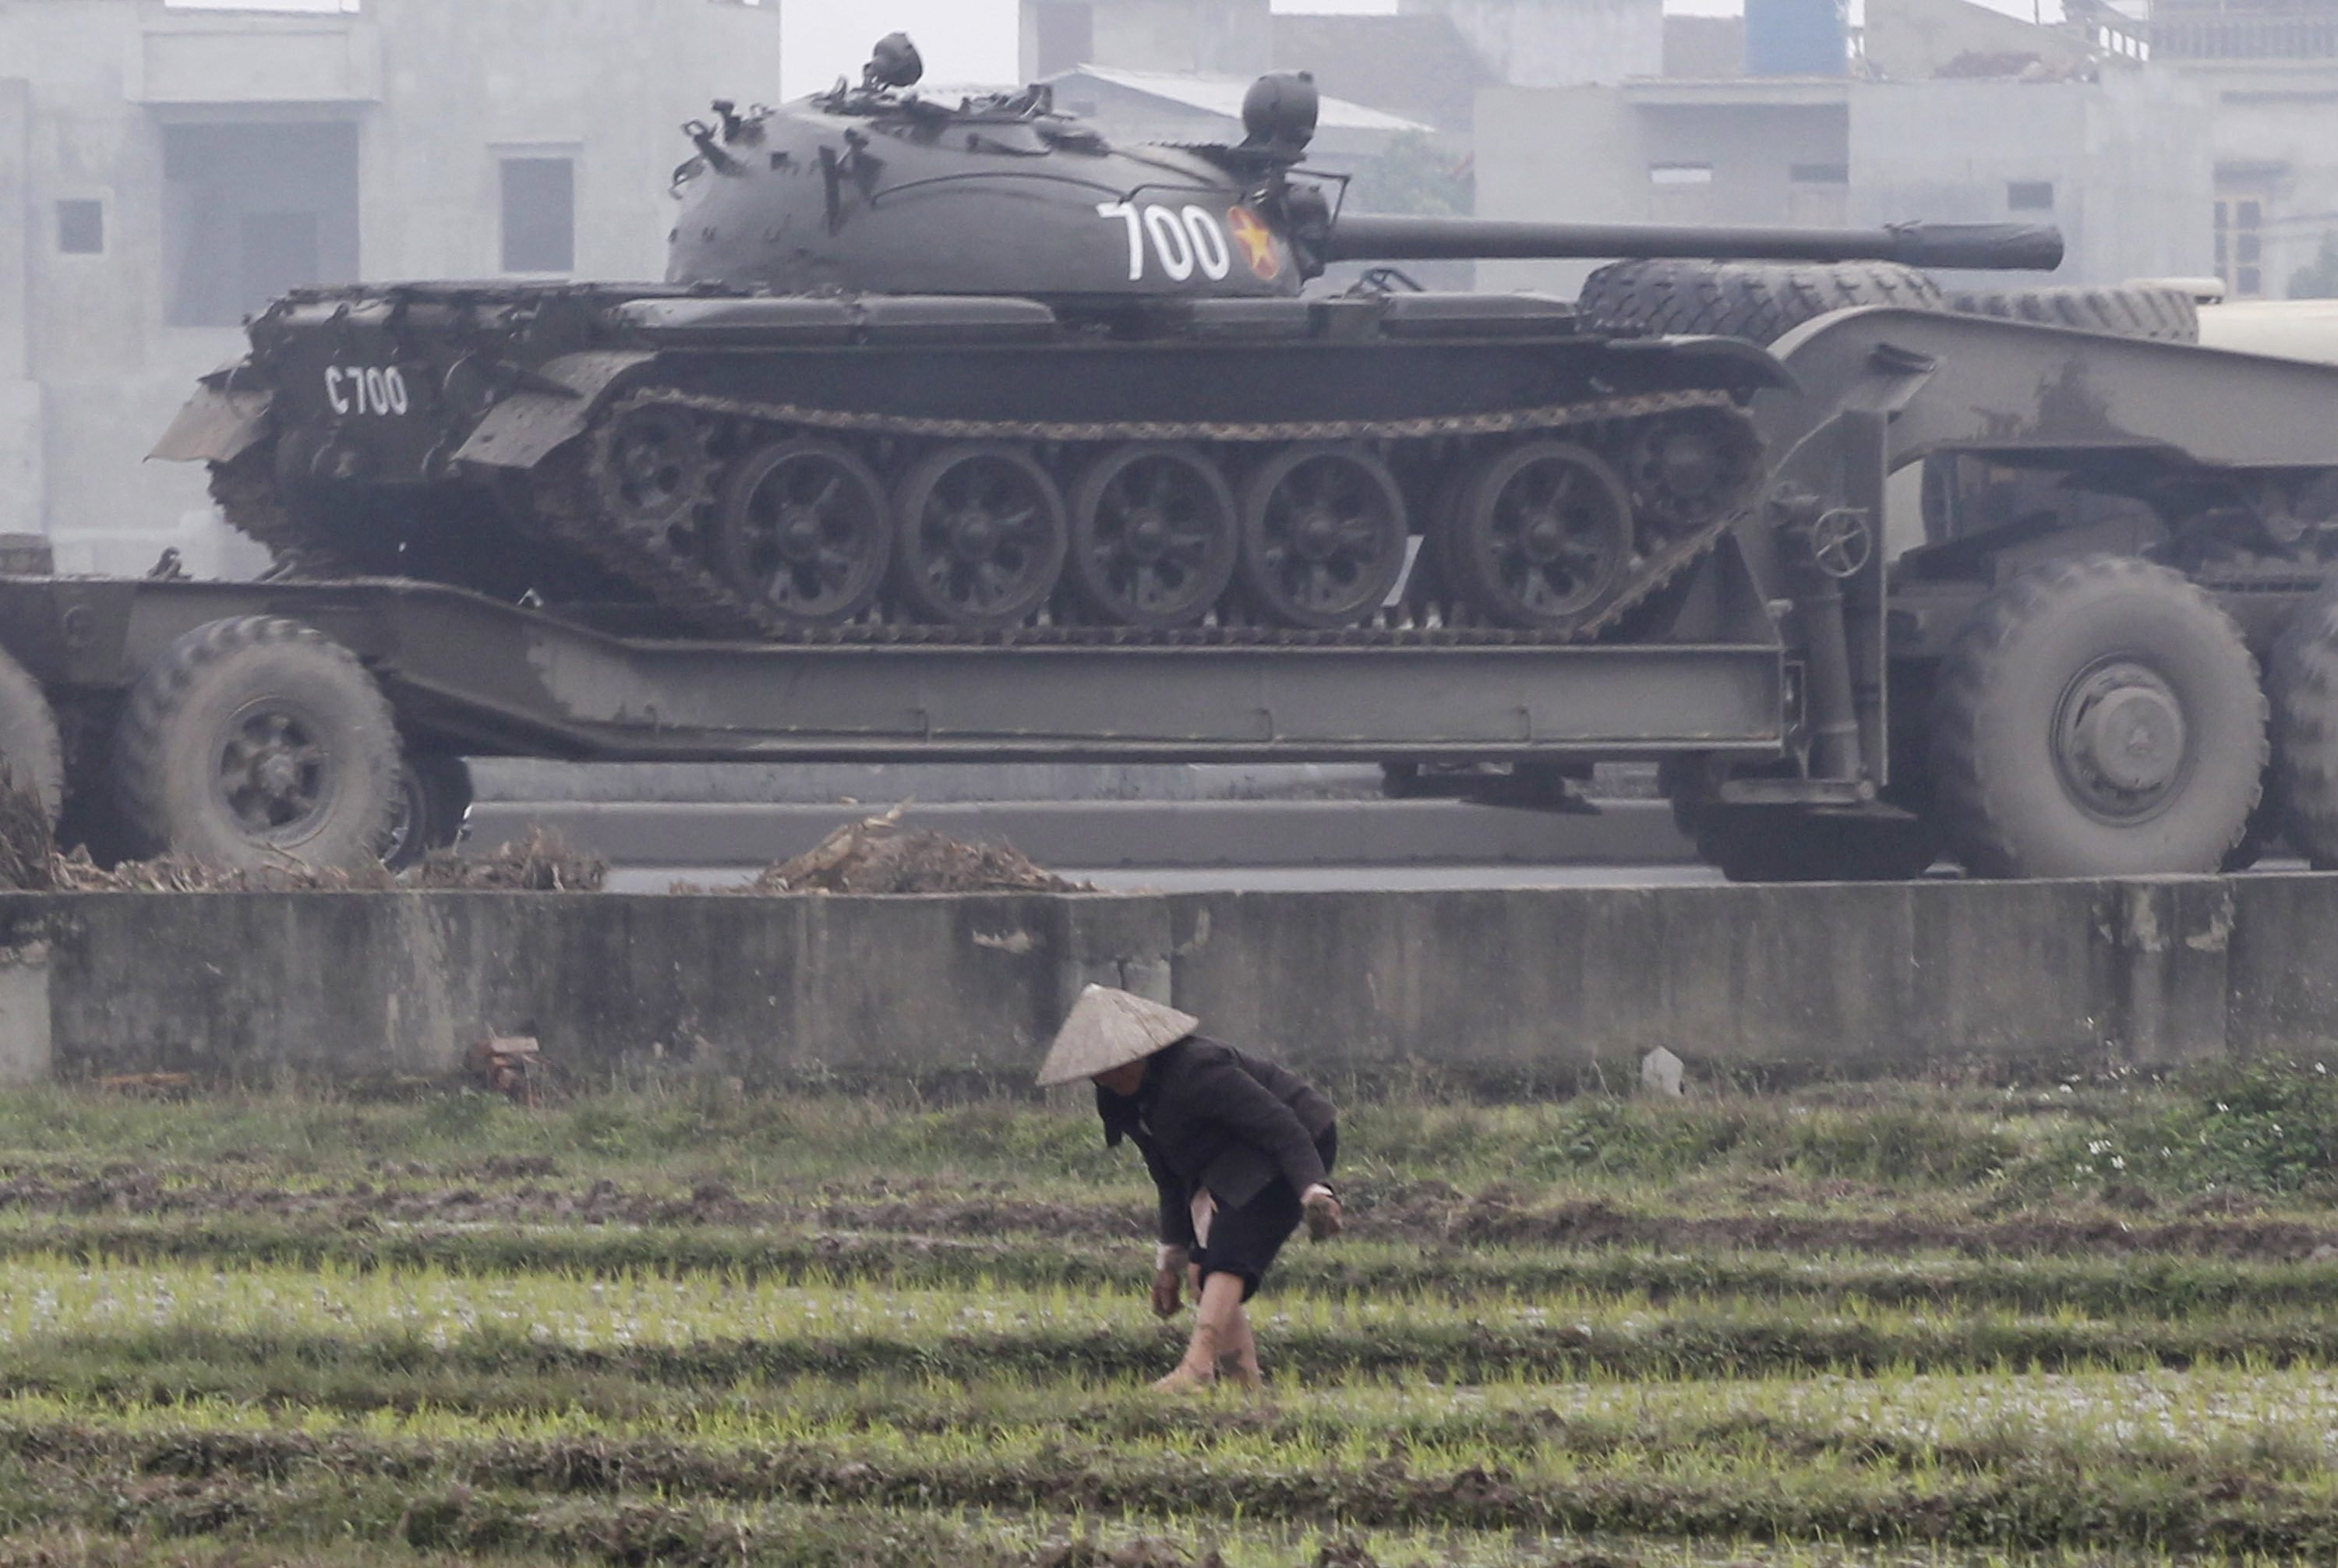 A military truck carries a tank past a farmer.